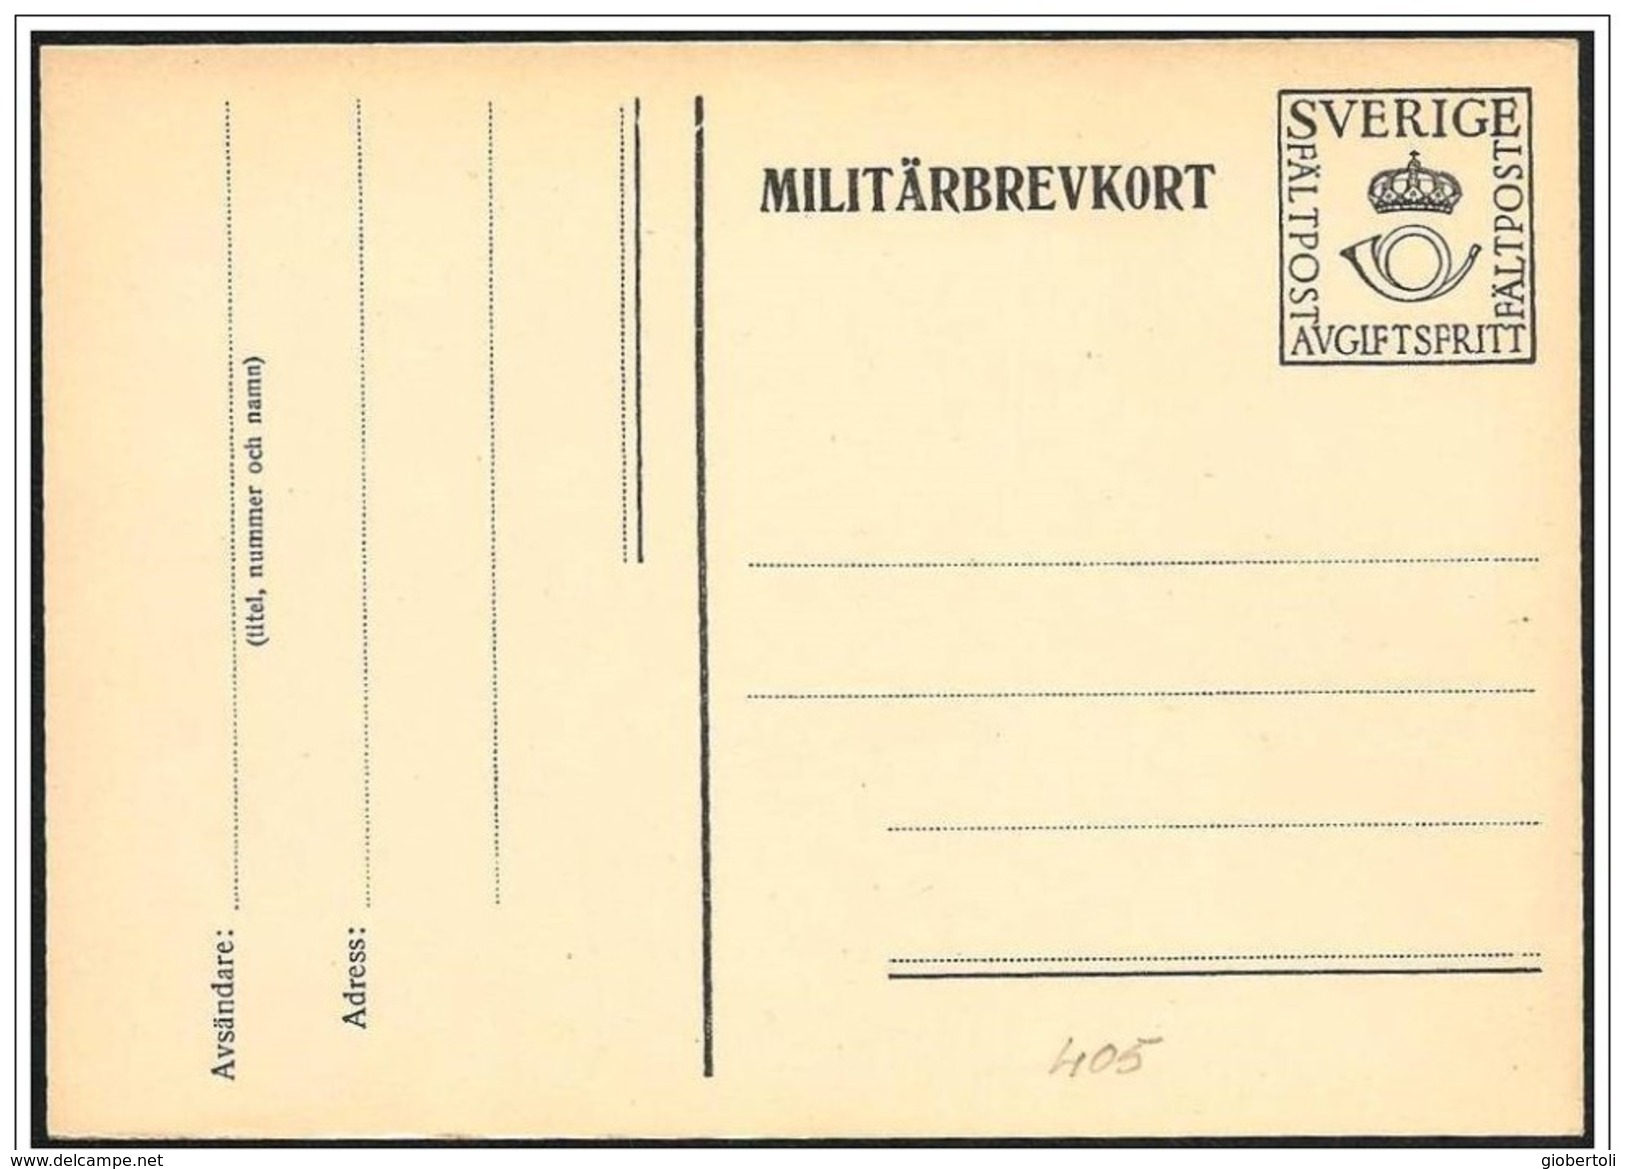 Svezia/Suède/Sweden: Intero, Stationery, Entier, Franchigia Militare, Free Military, Franchise Militaire - Military